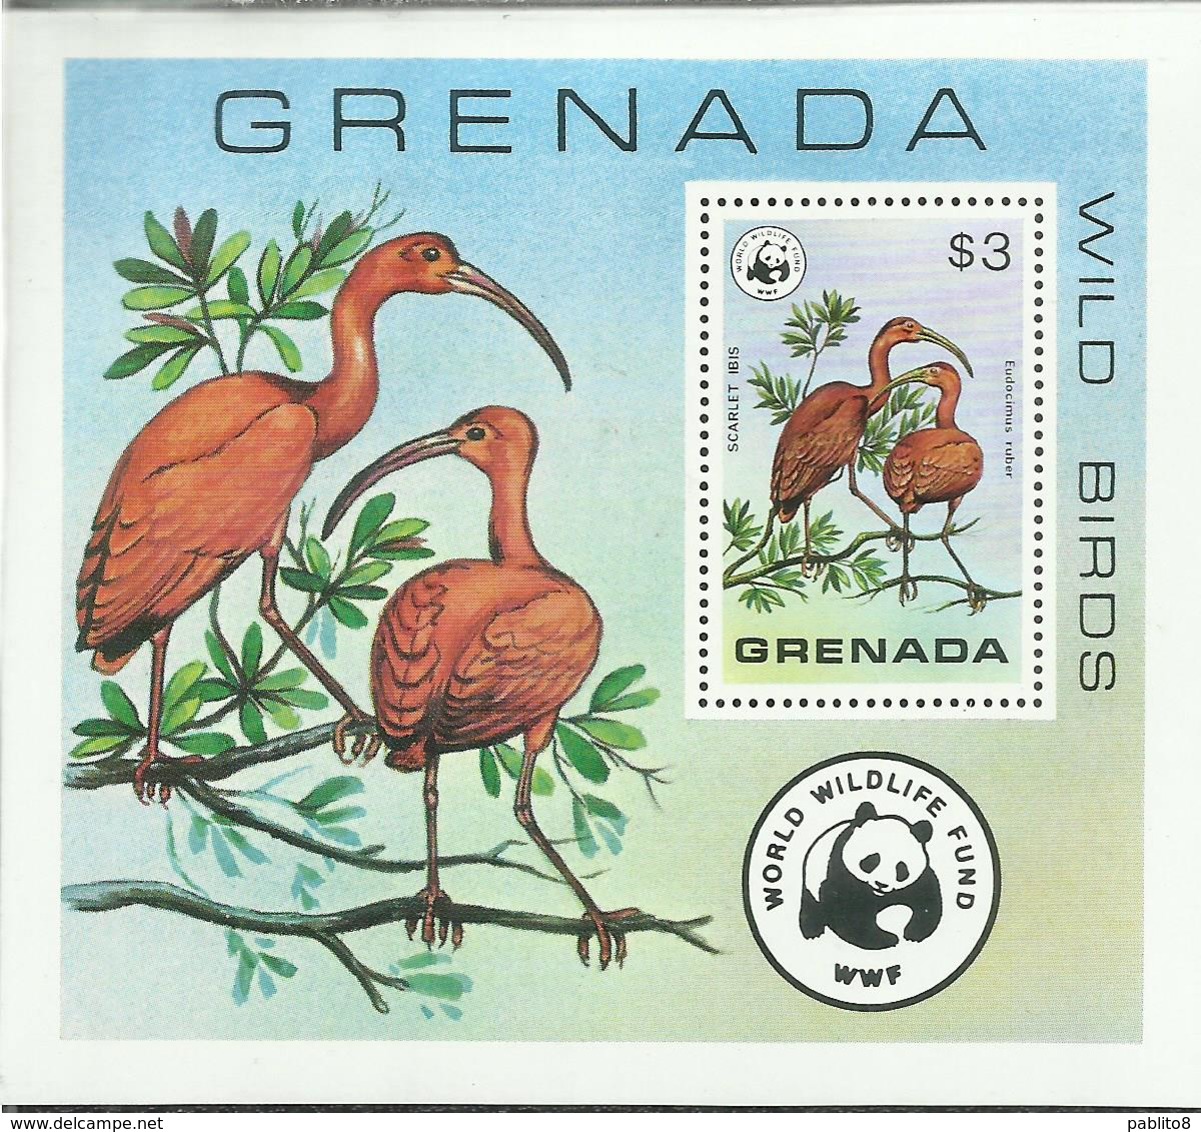 GRENADA 1978 FAUNA WWF WILD BIRDS SCARLET IBIS BLOCK SHEET BLOCCO FOGLIETTO MNH - Grenada (1974-...)